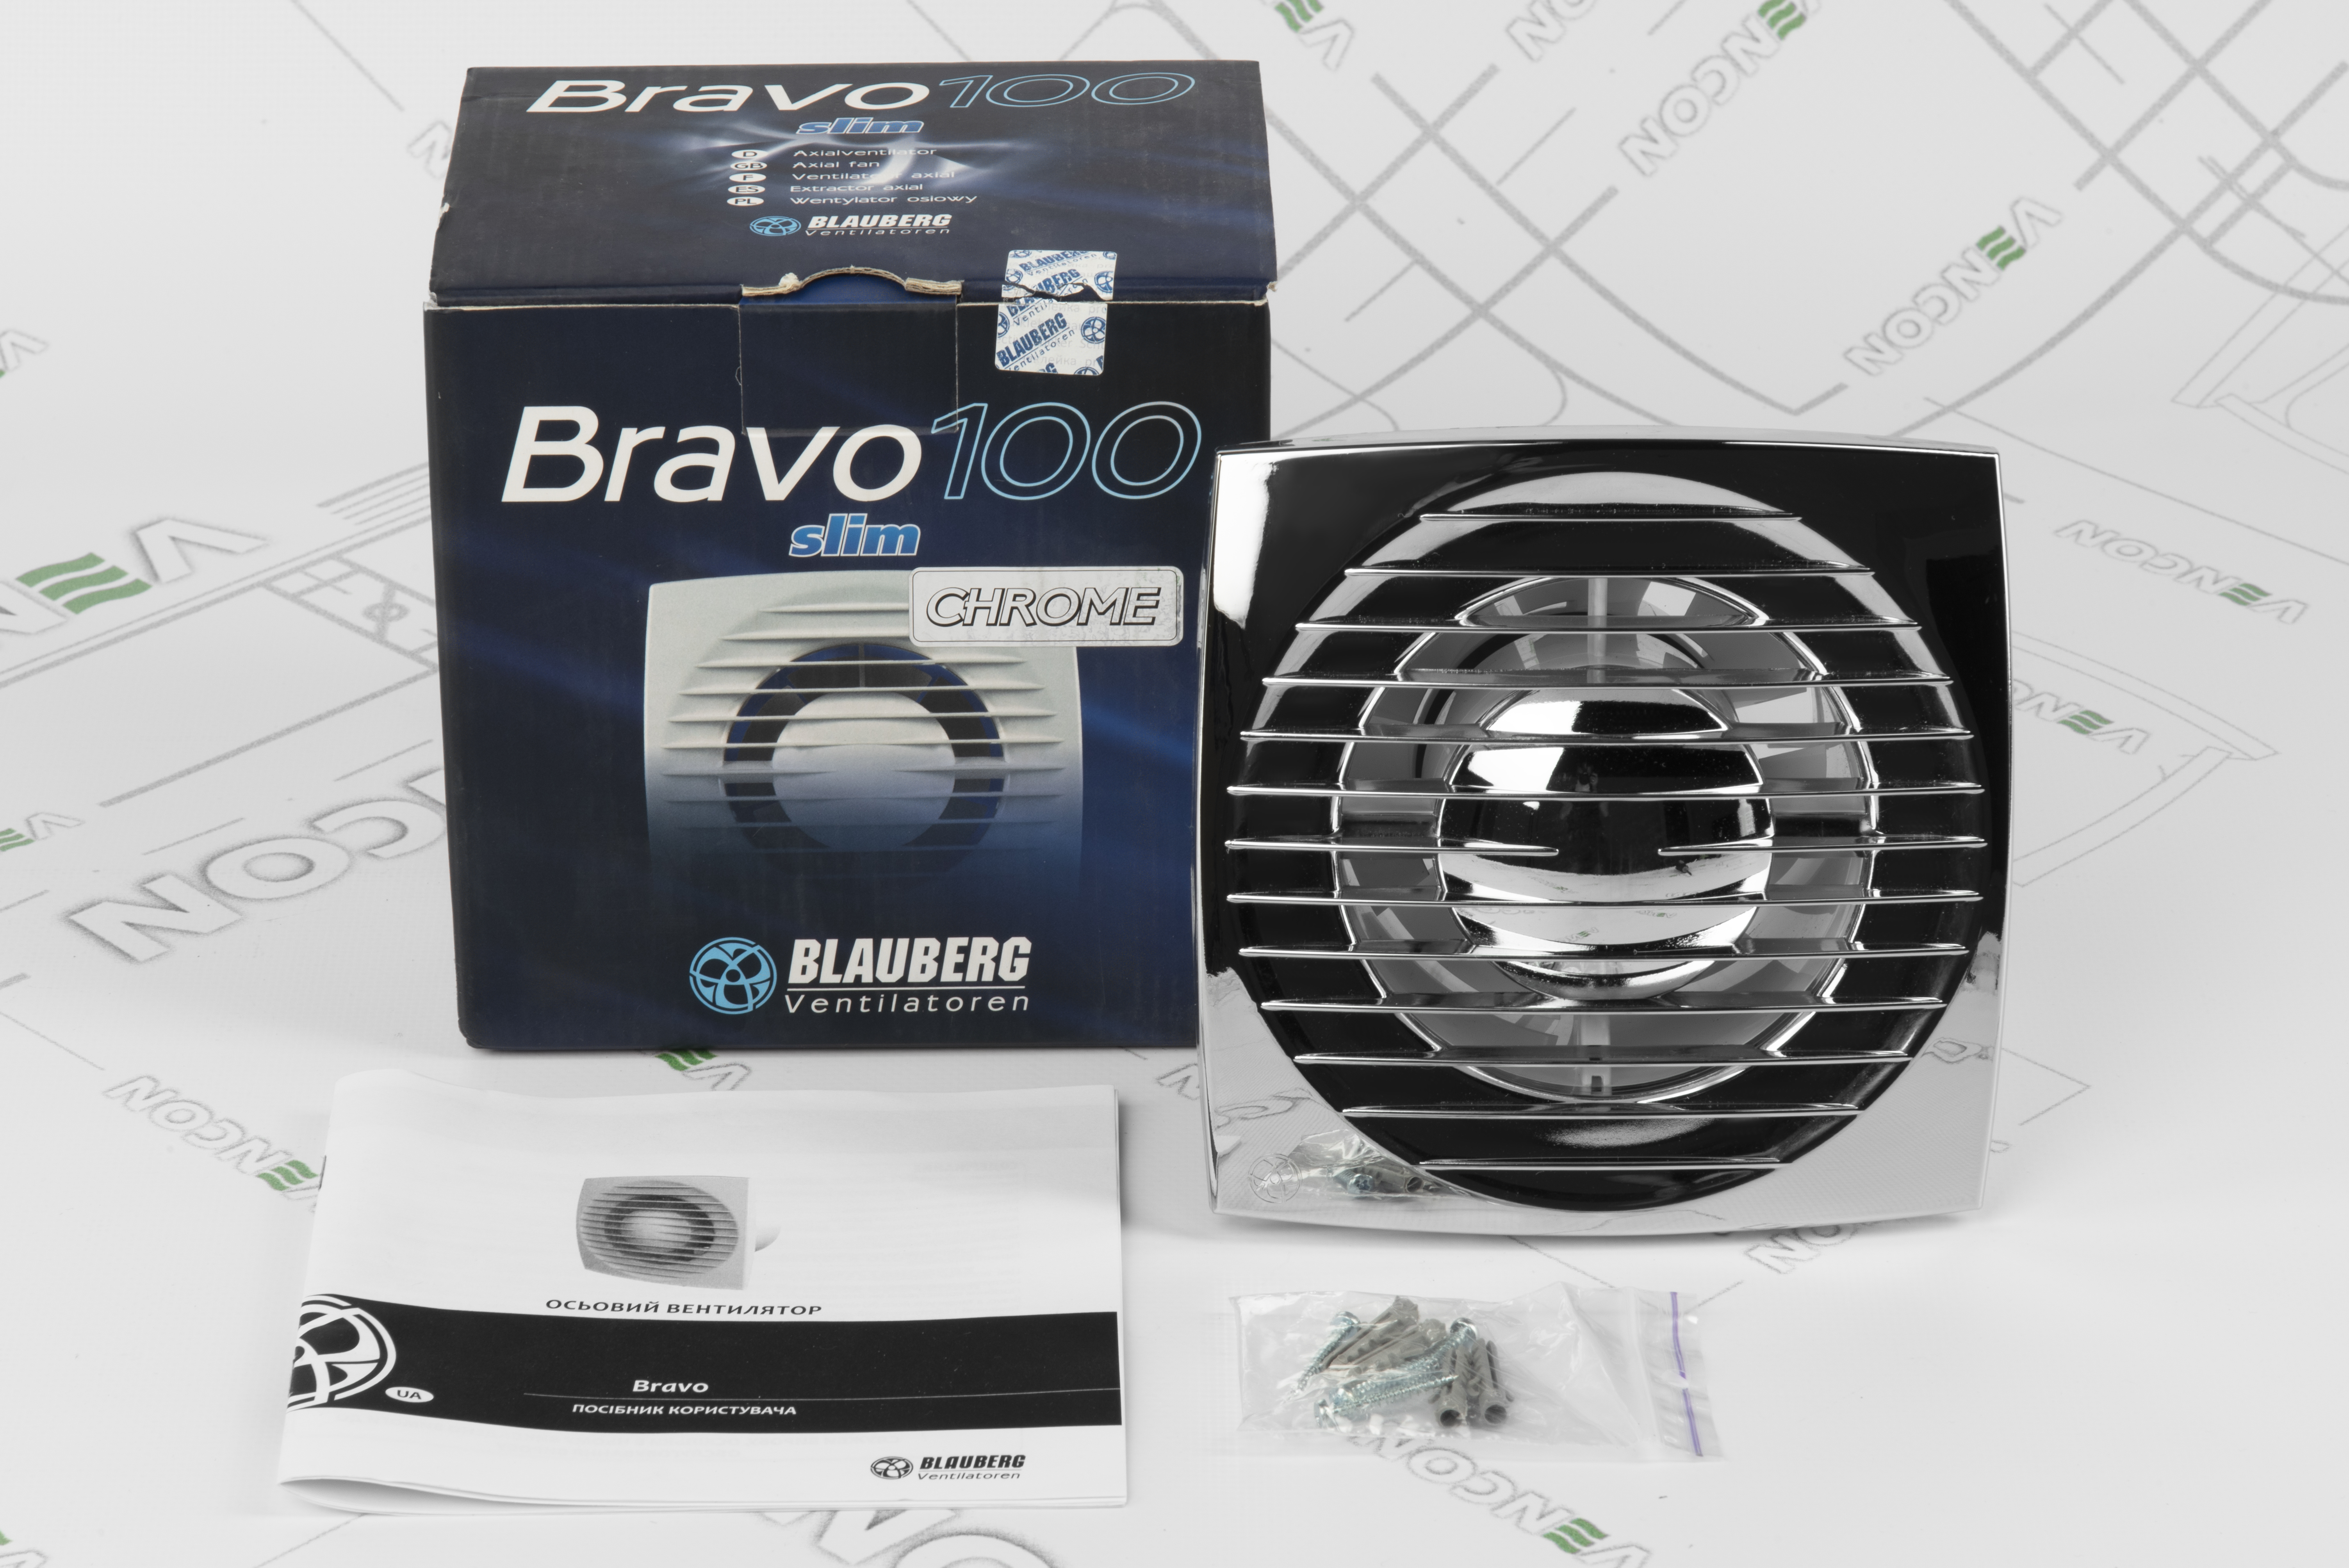 Вытяжной вентилятор Blauberg Bravo Chrome 100 характеристики - фотография 7